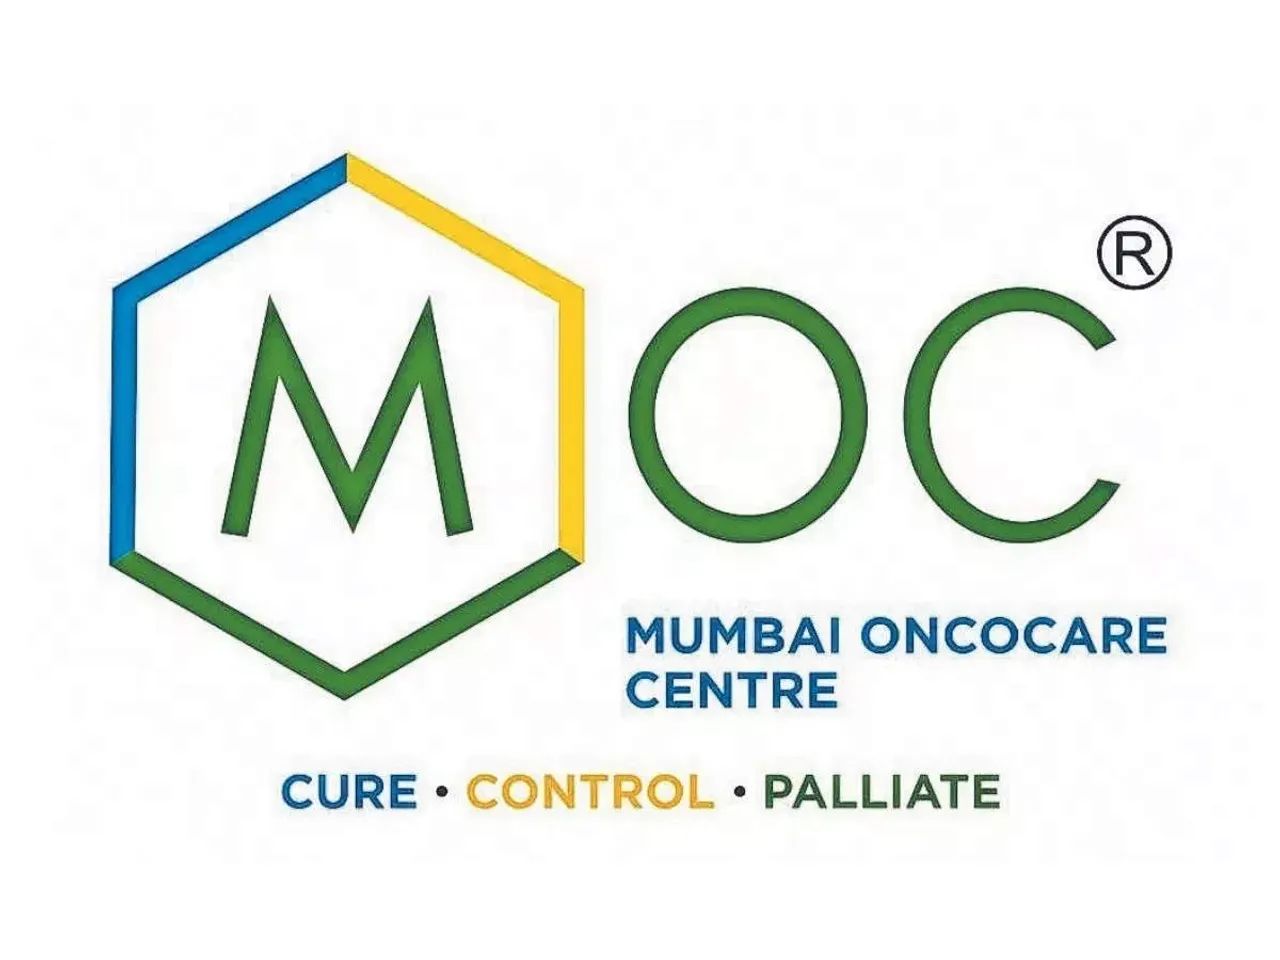 Mumbai Oncocare Centre raises $10M from Tata Capital's Healthcare Fund